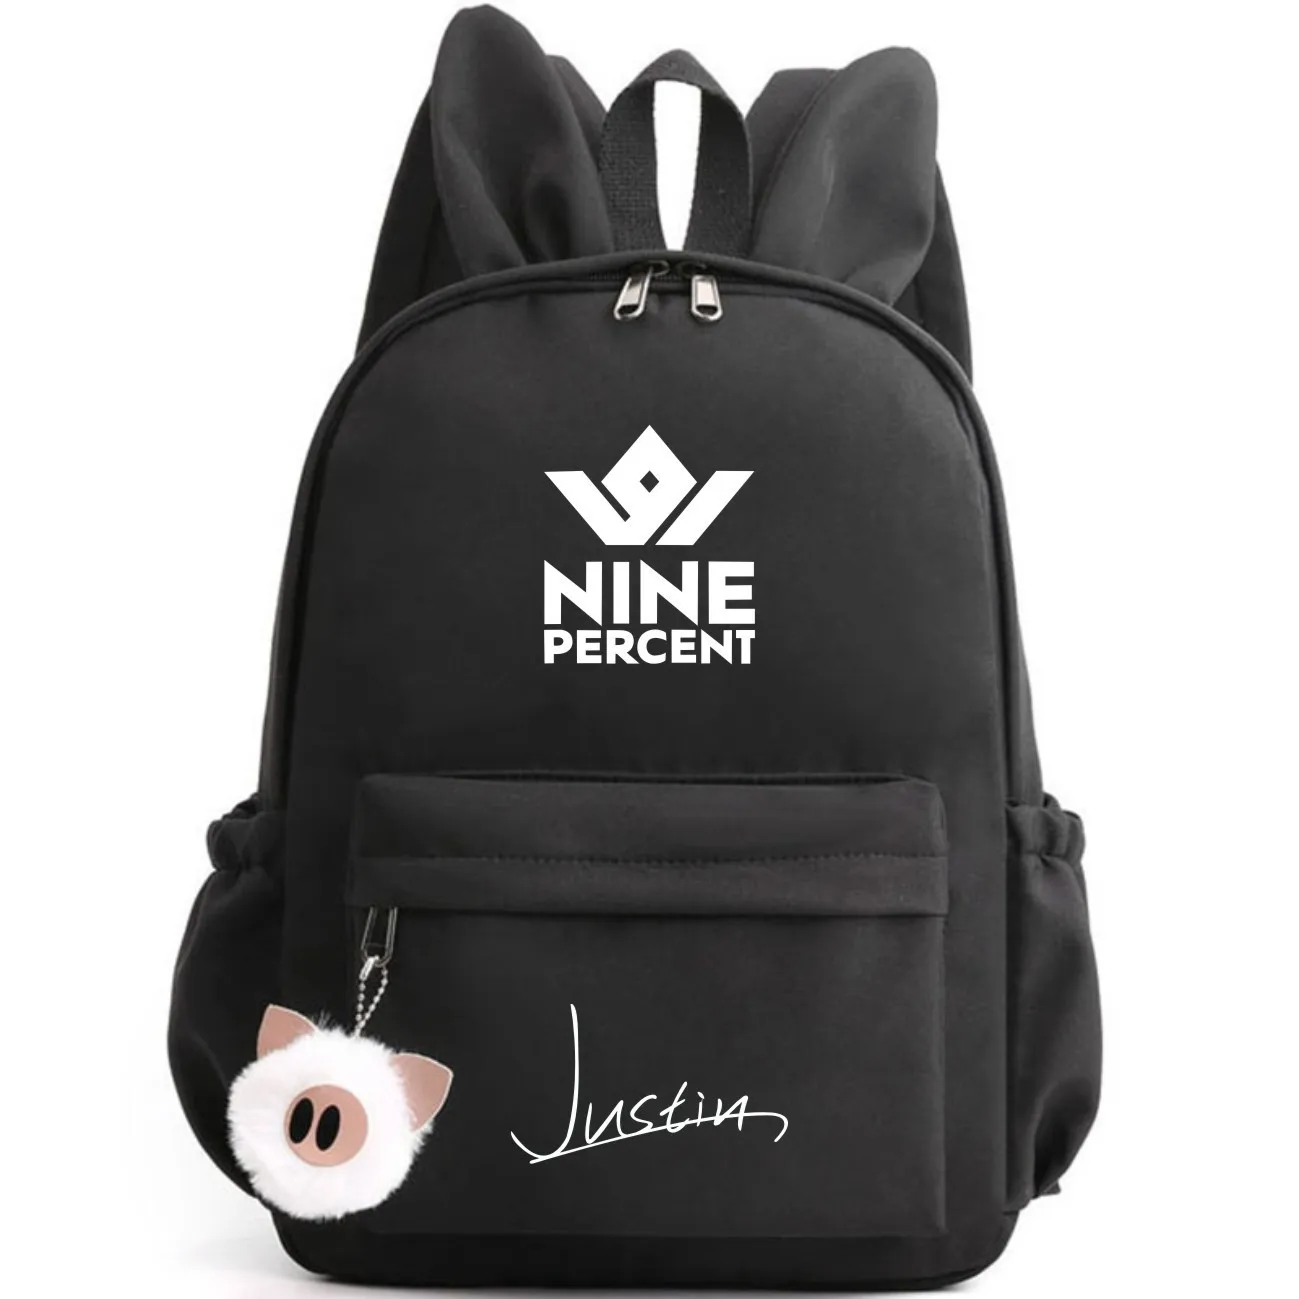 

New arrival Nine Percent Stars Backpack School Bags Mochila Travel Laptop Bags Rabbit ears cute backpack for teenage girls